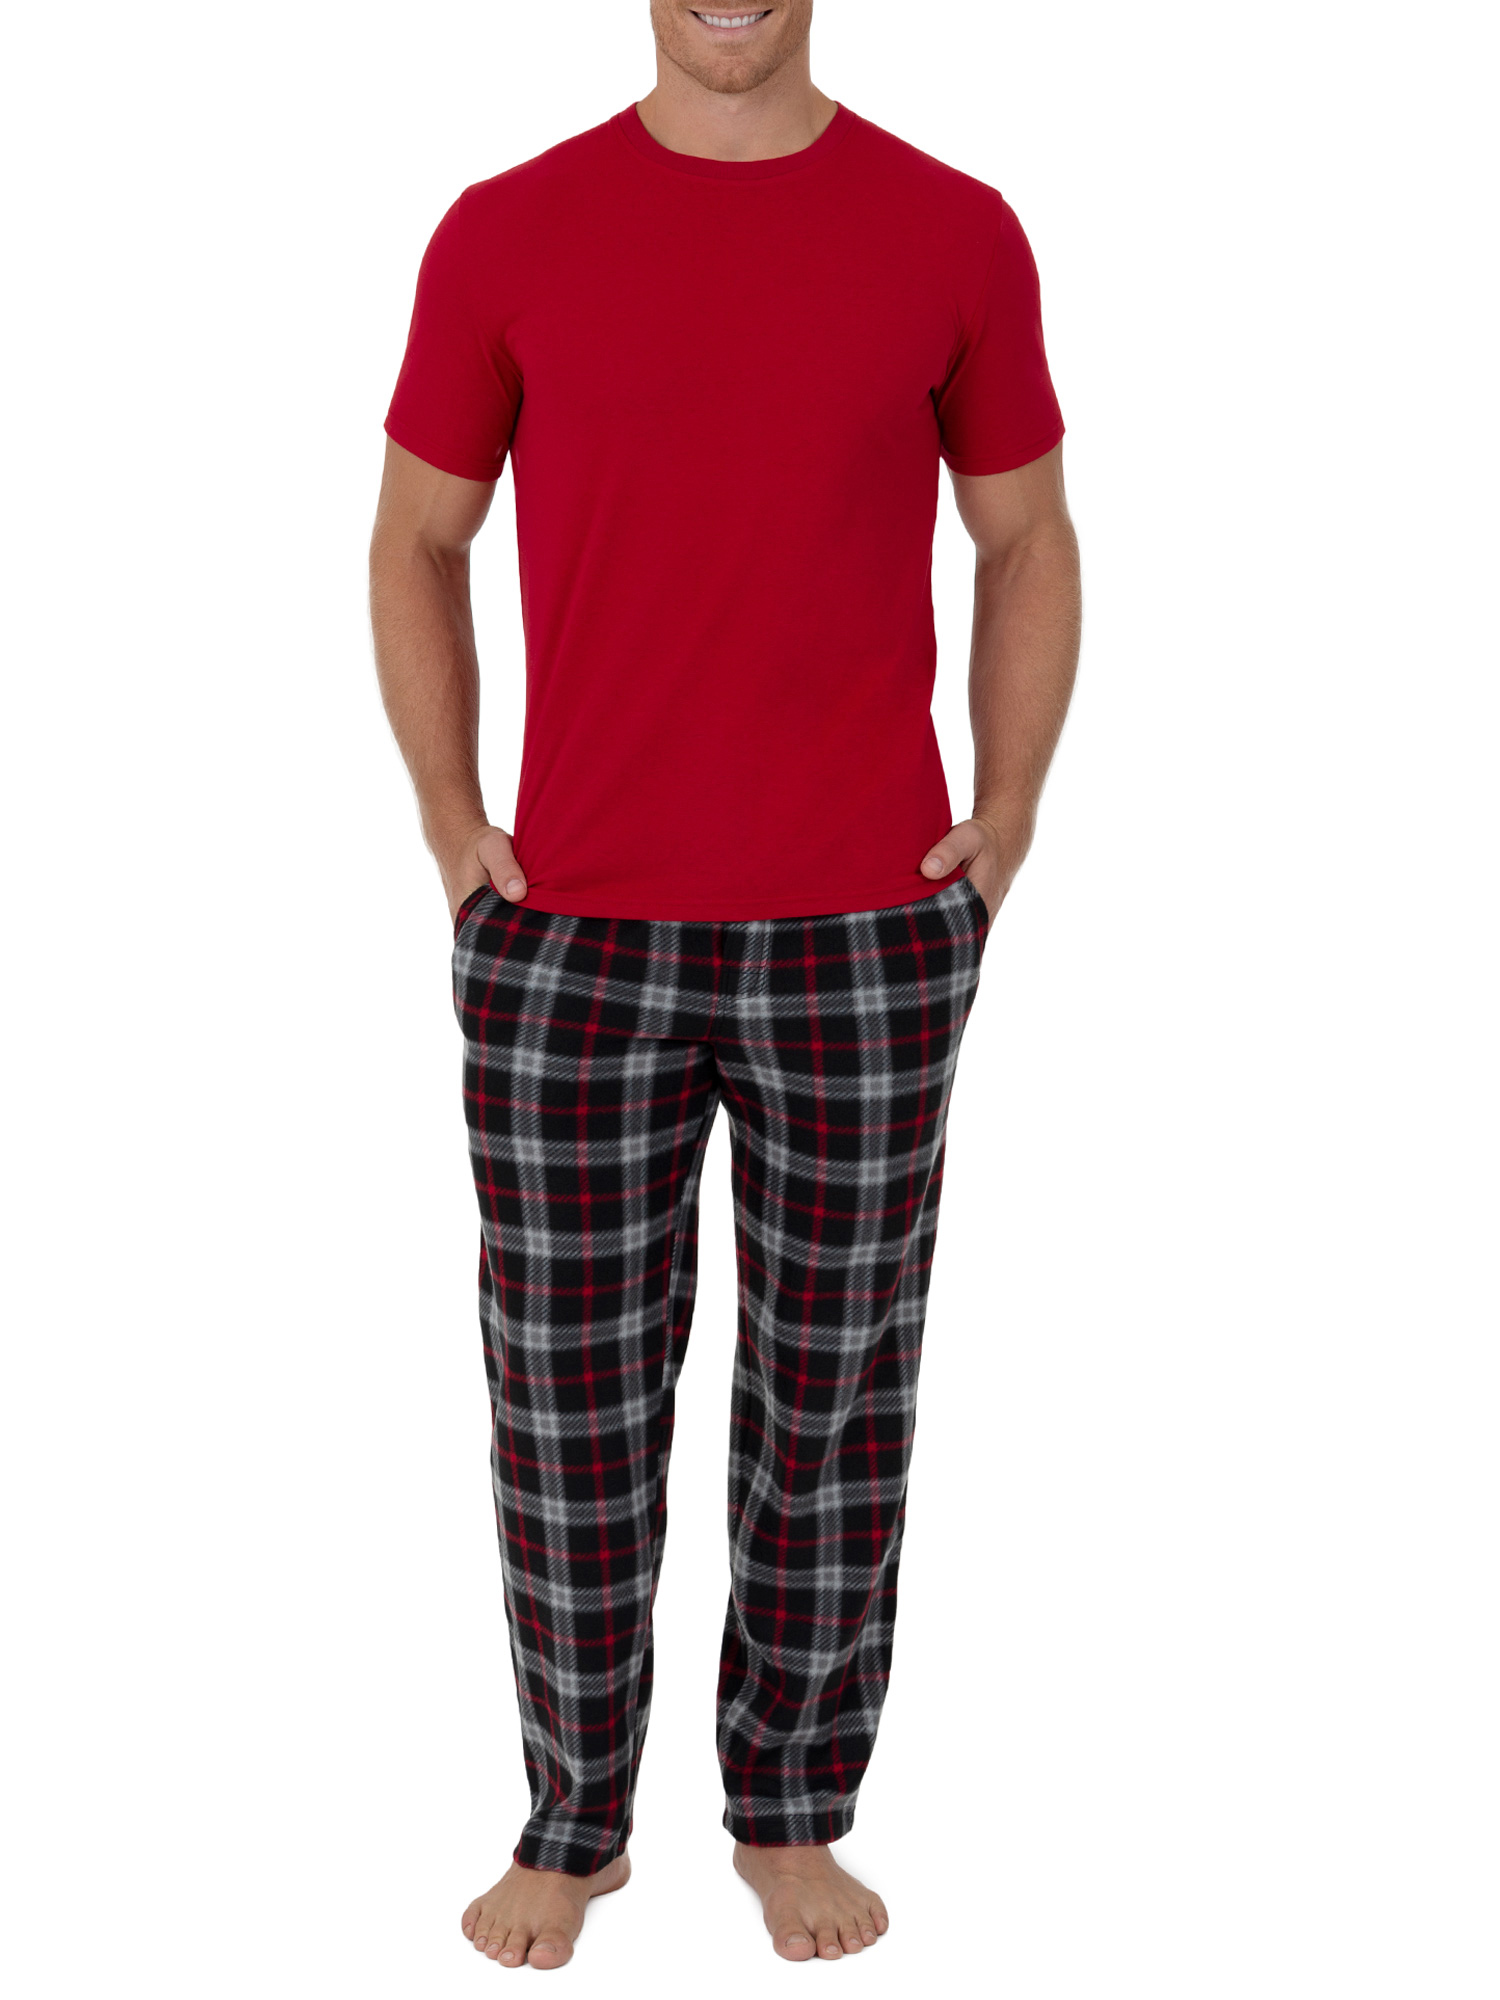 Fruit Of The Loom Men’s Short Sleeve Crewneck Top and Fleece Pajama Pants Set - image 1 of 5